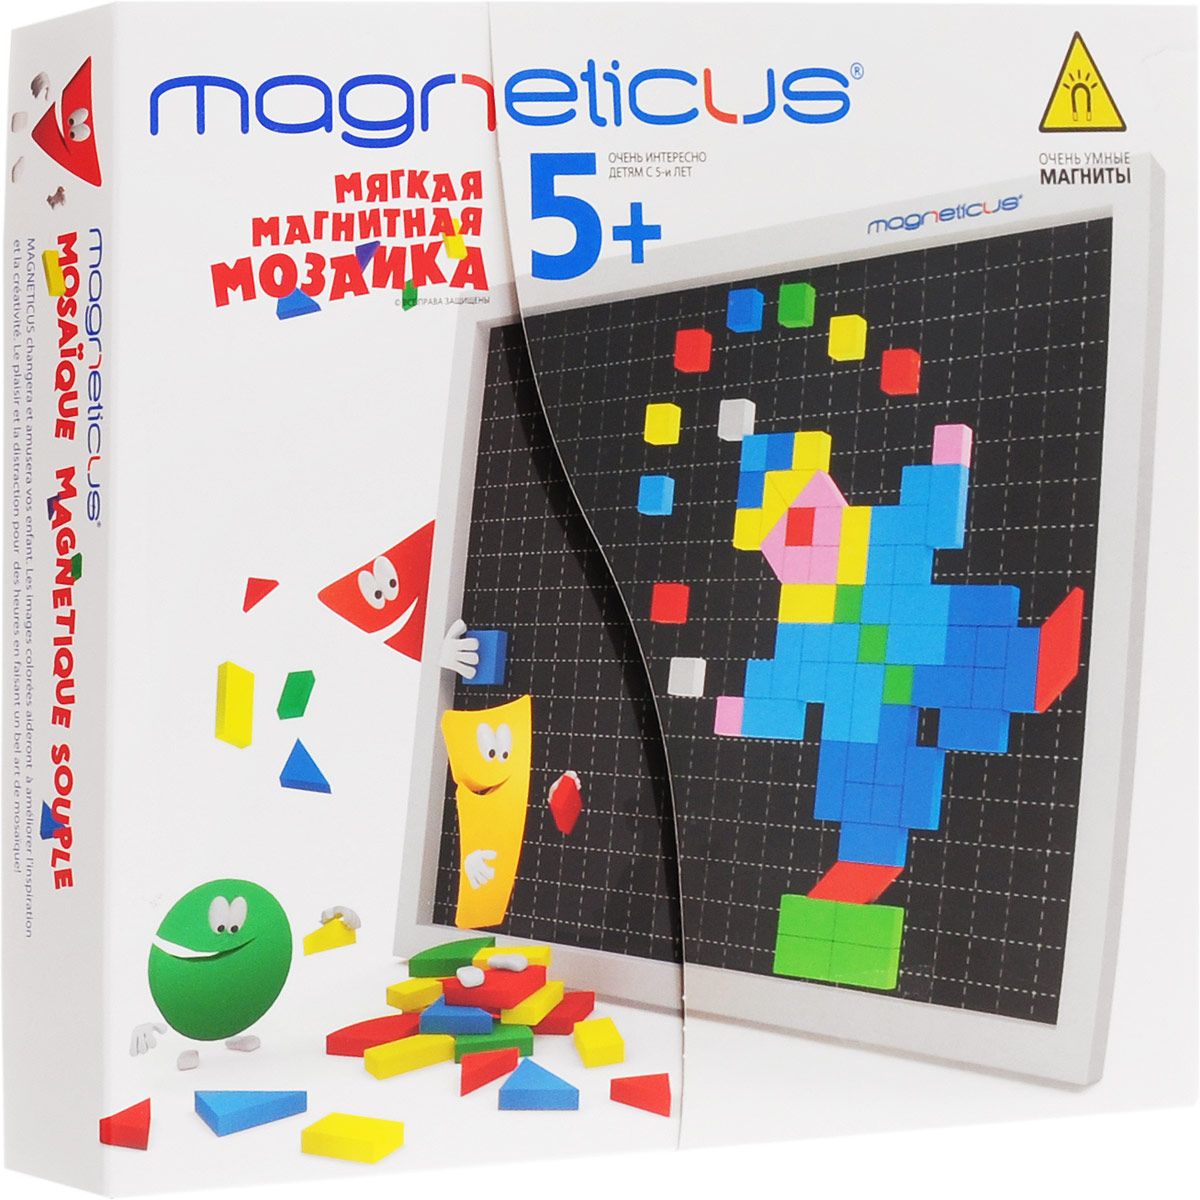 Magneticus  MM-220